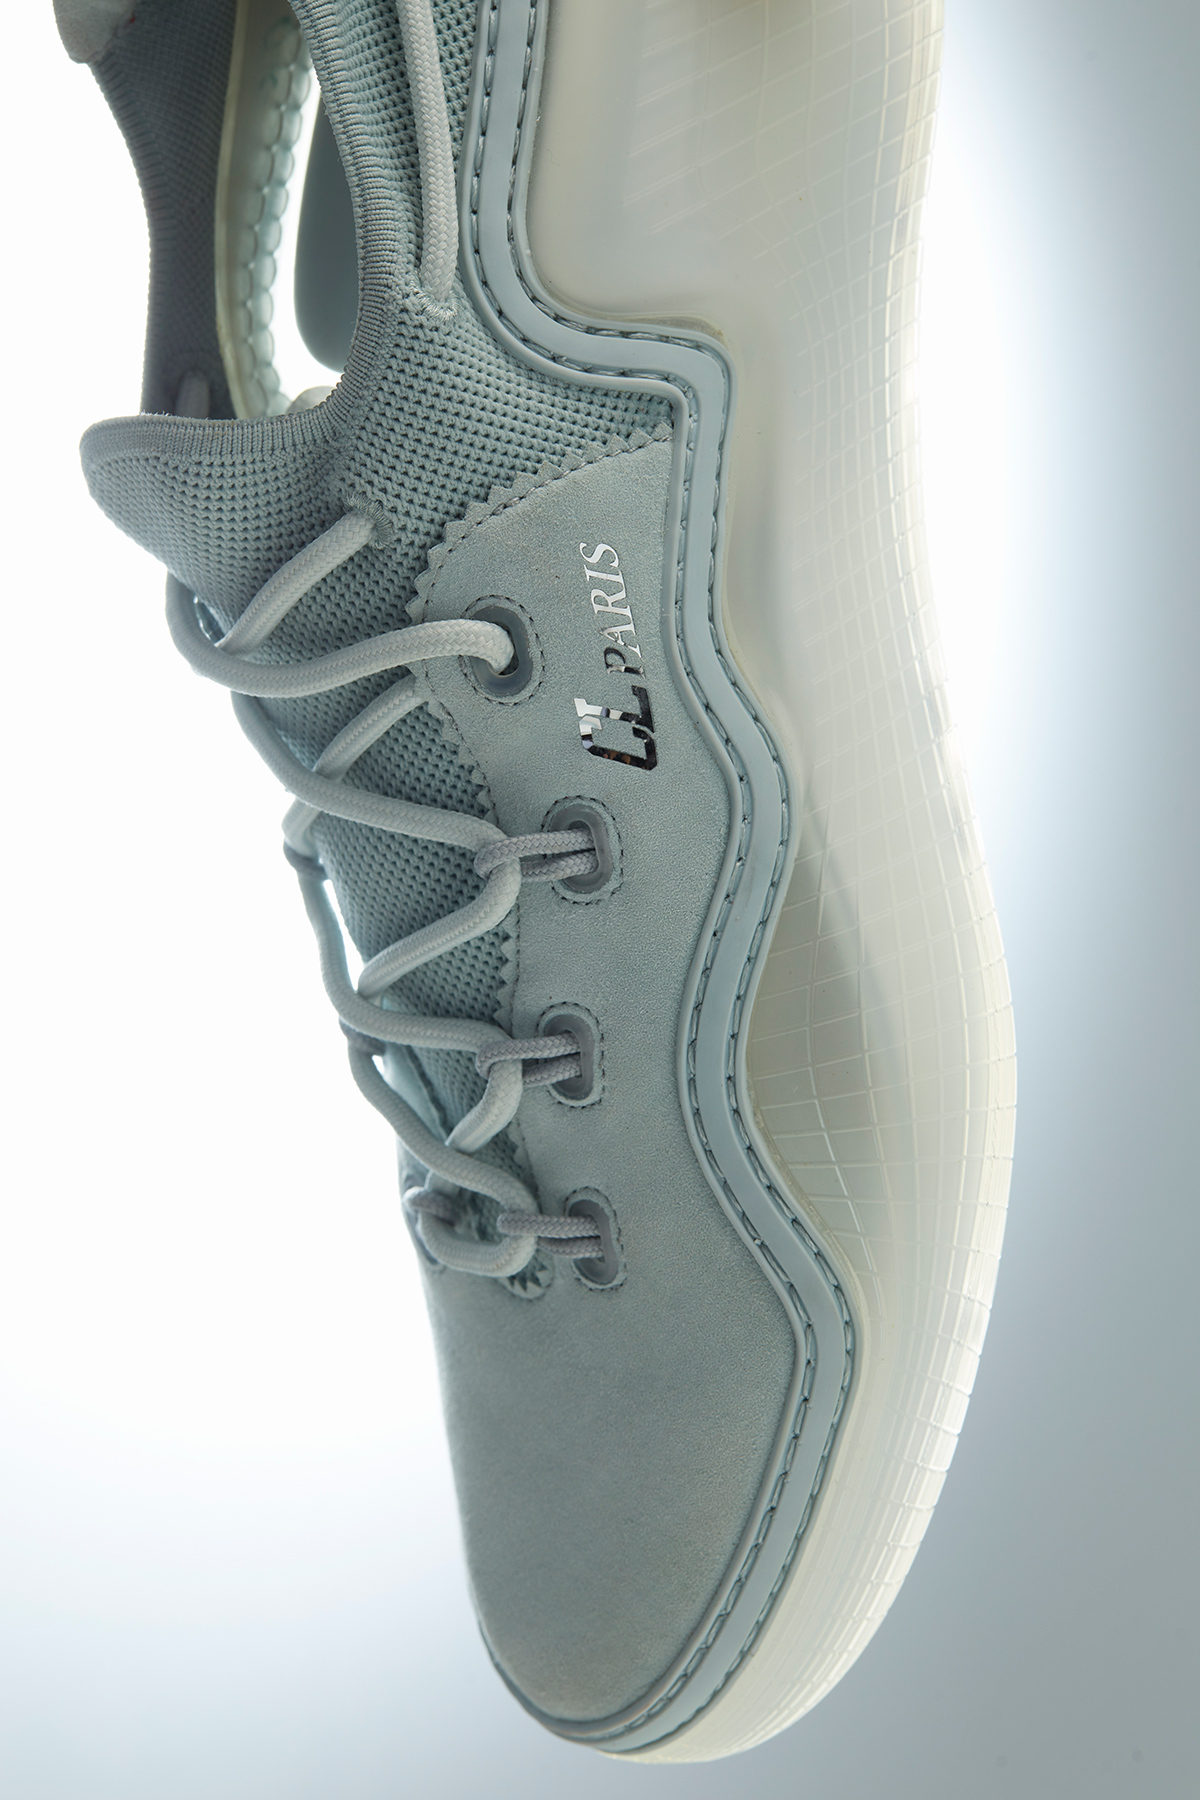 louboutin-arpoador-sneaker-new-06